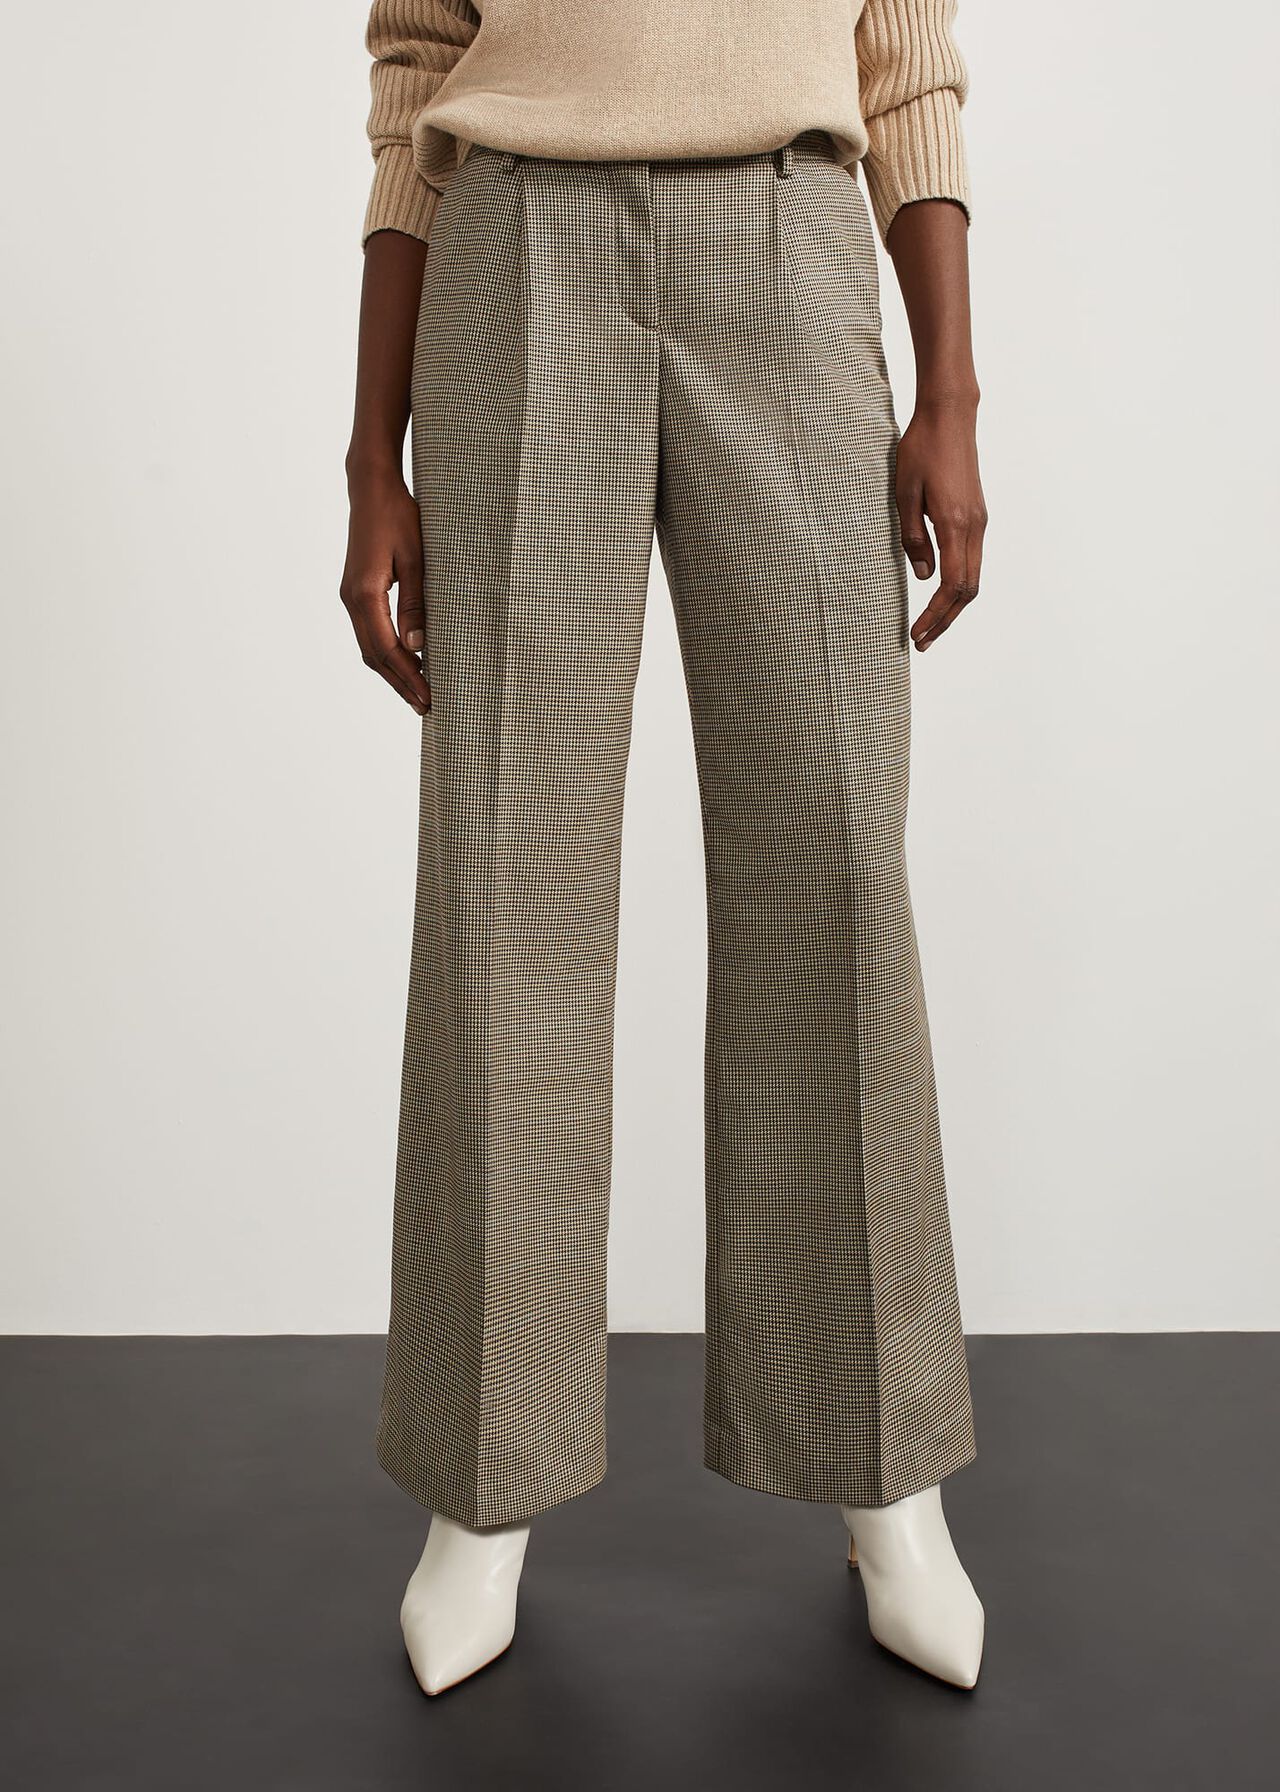 Hawthorne Trousers, Neutral Multi, hi-res